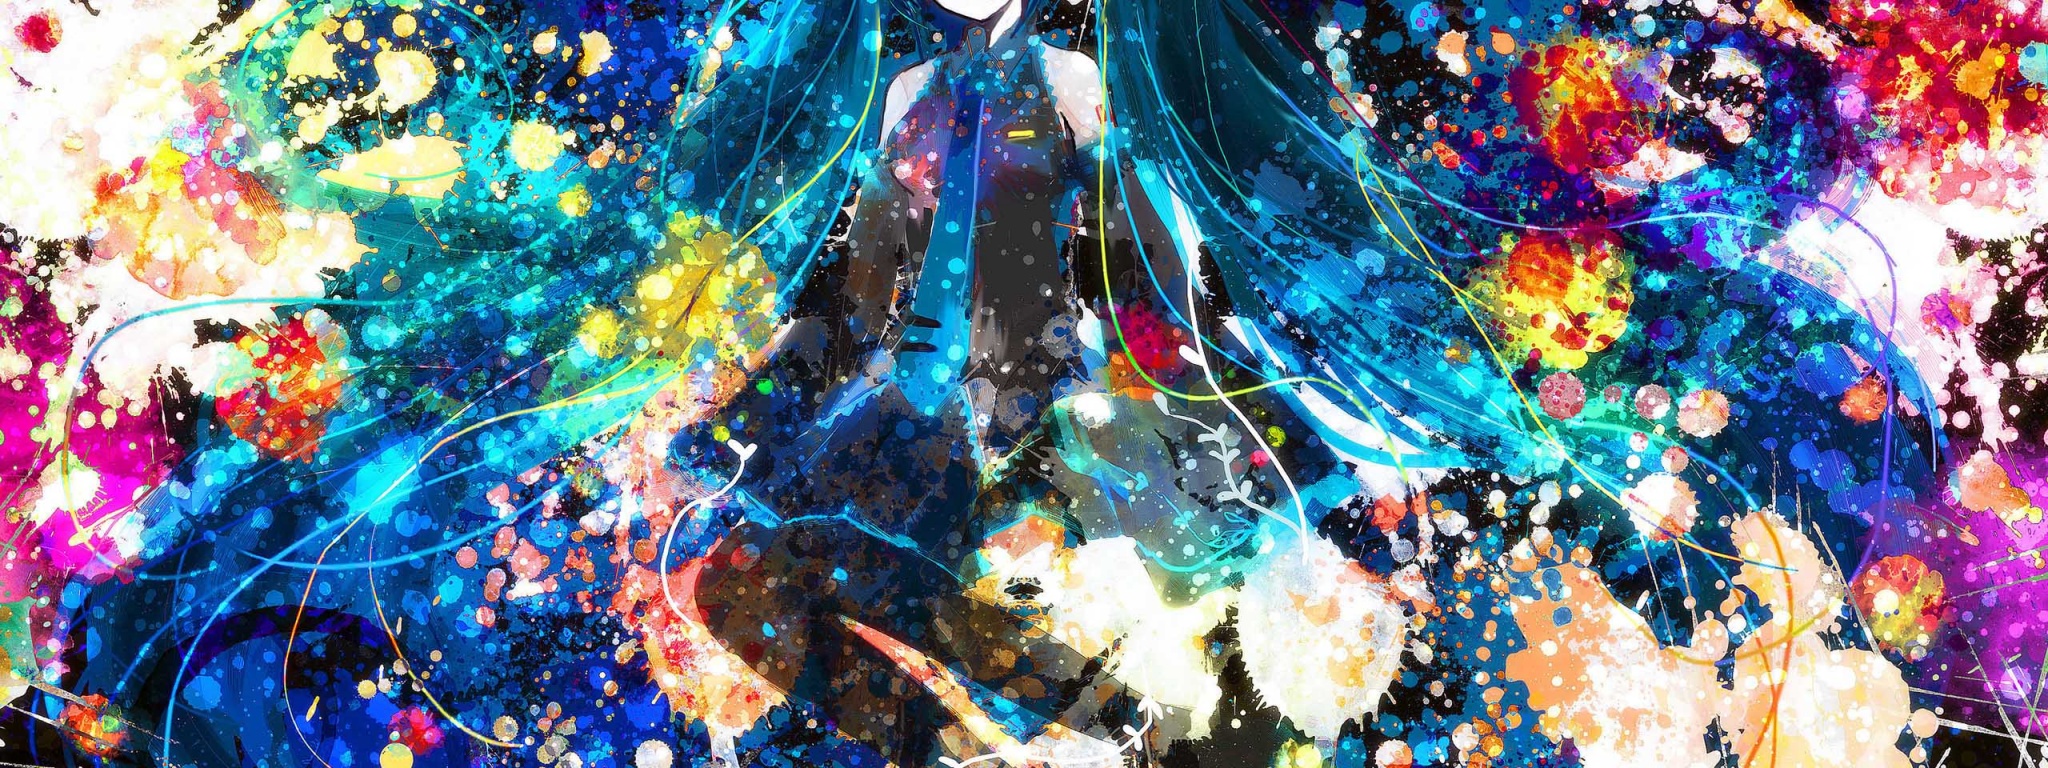 Hatsune Miku Vocaloid Blue Hair Paint